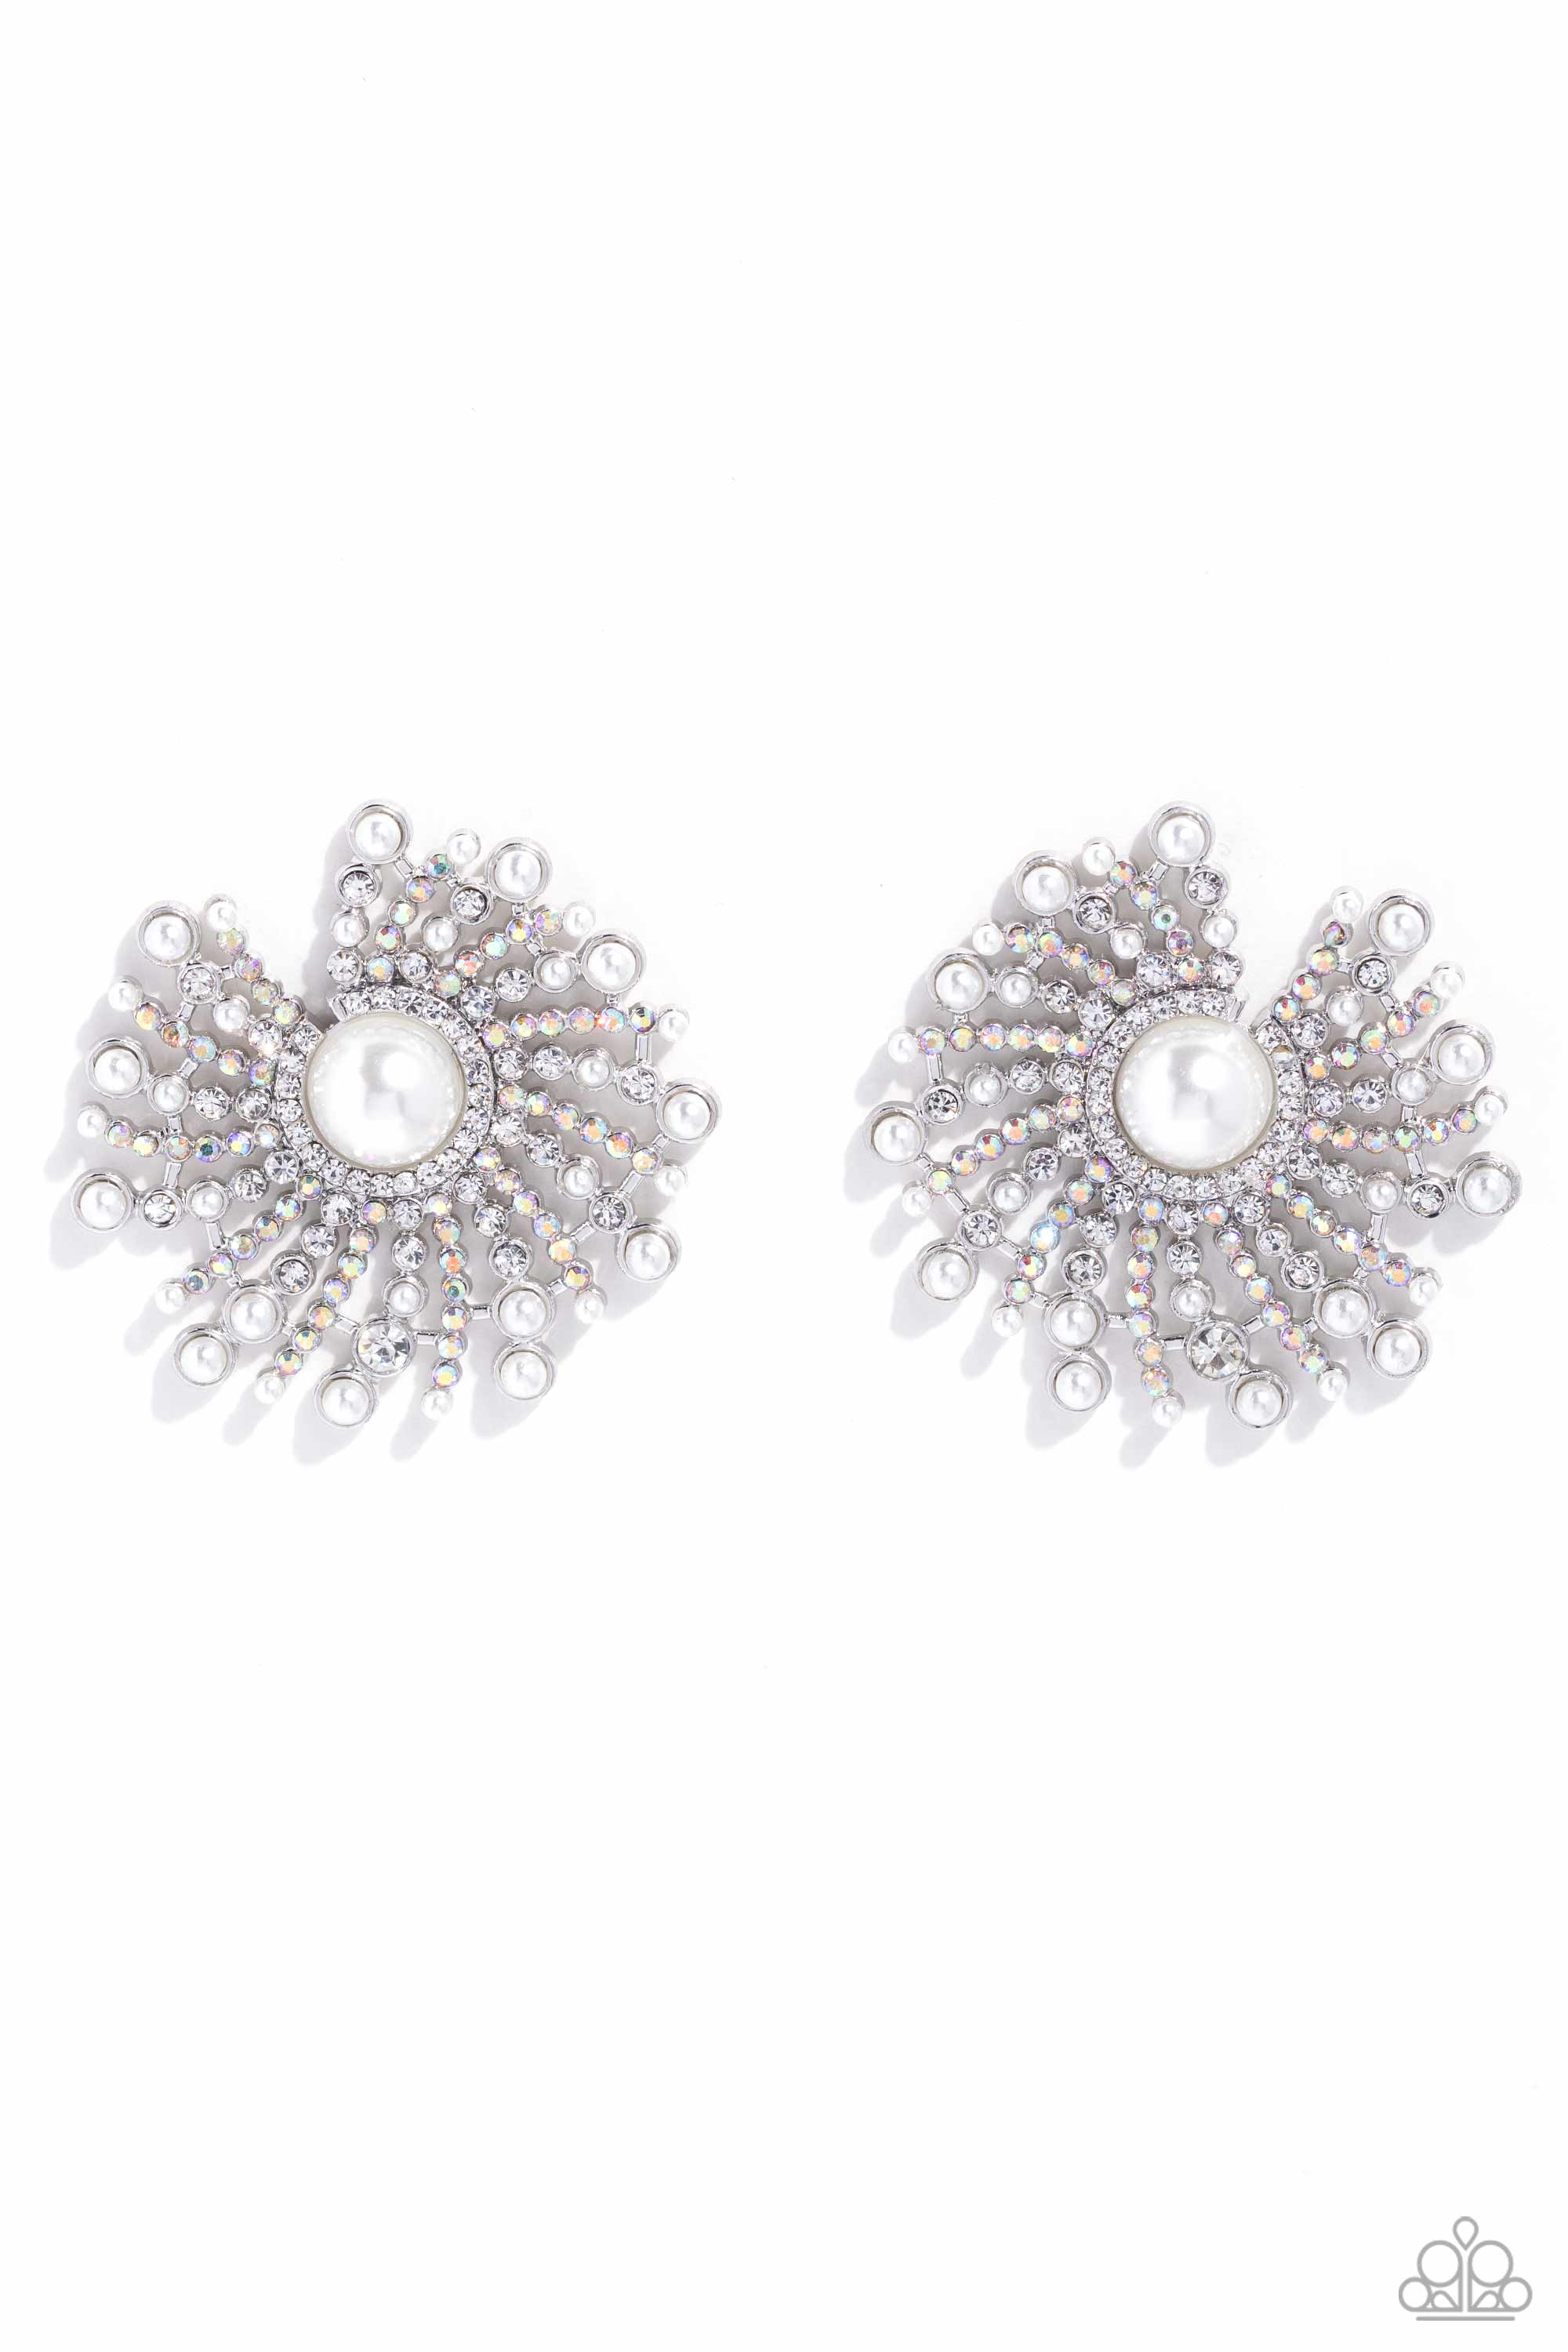 Fancy Fireworks White Pearl & Rhinestone Earrings - Paparazzi Accessories- lightbox - CarasShop.com - $5 Jewelry by Cara Jewels